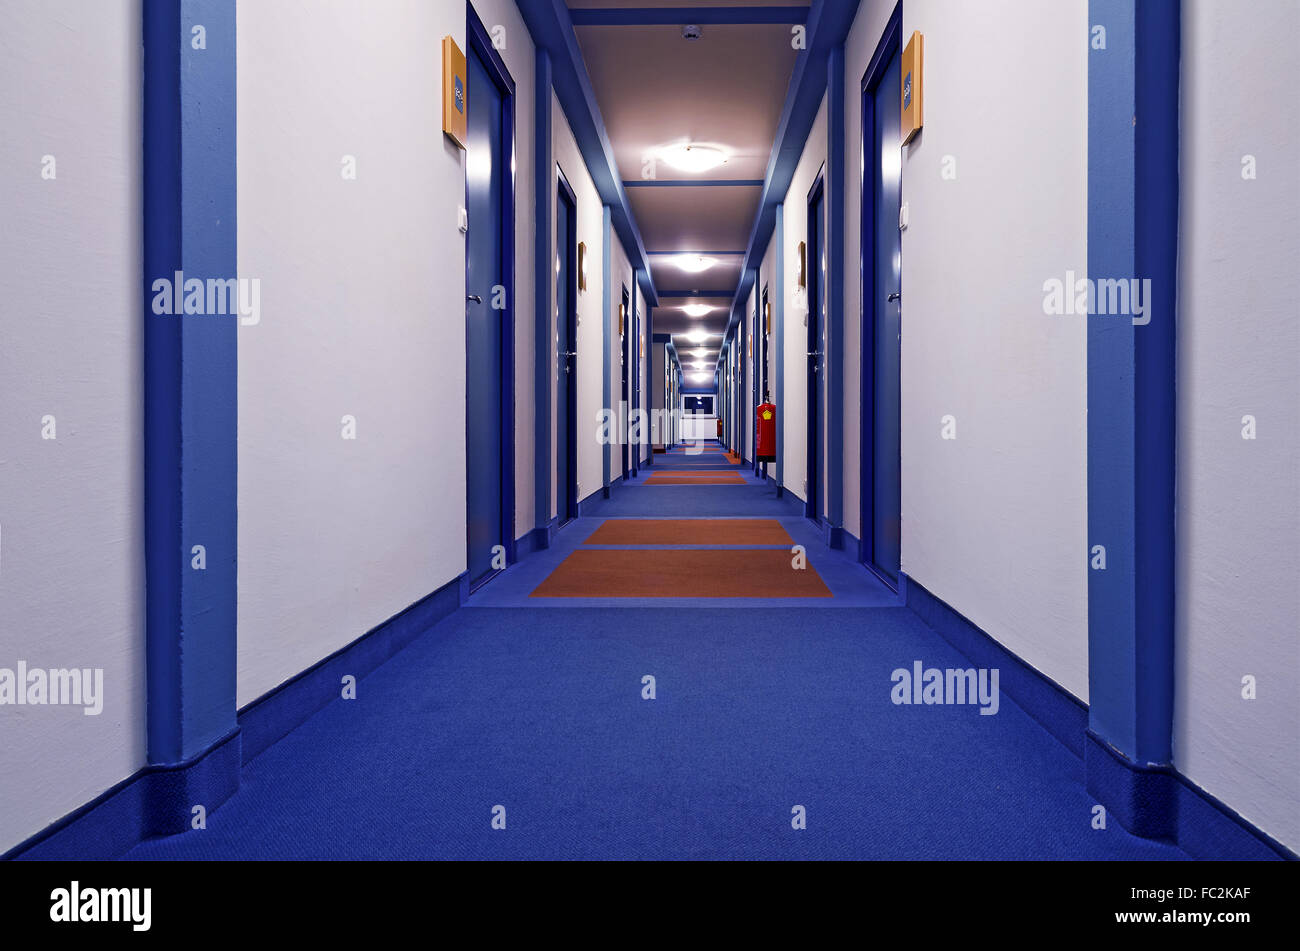 hallway with room doors Stock Photo